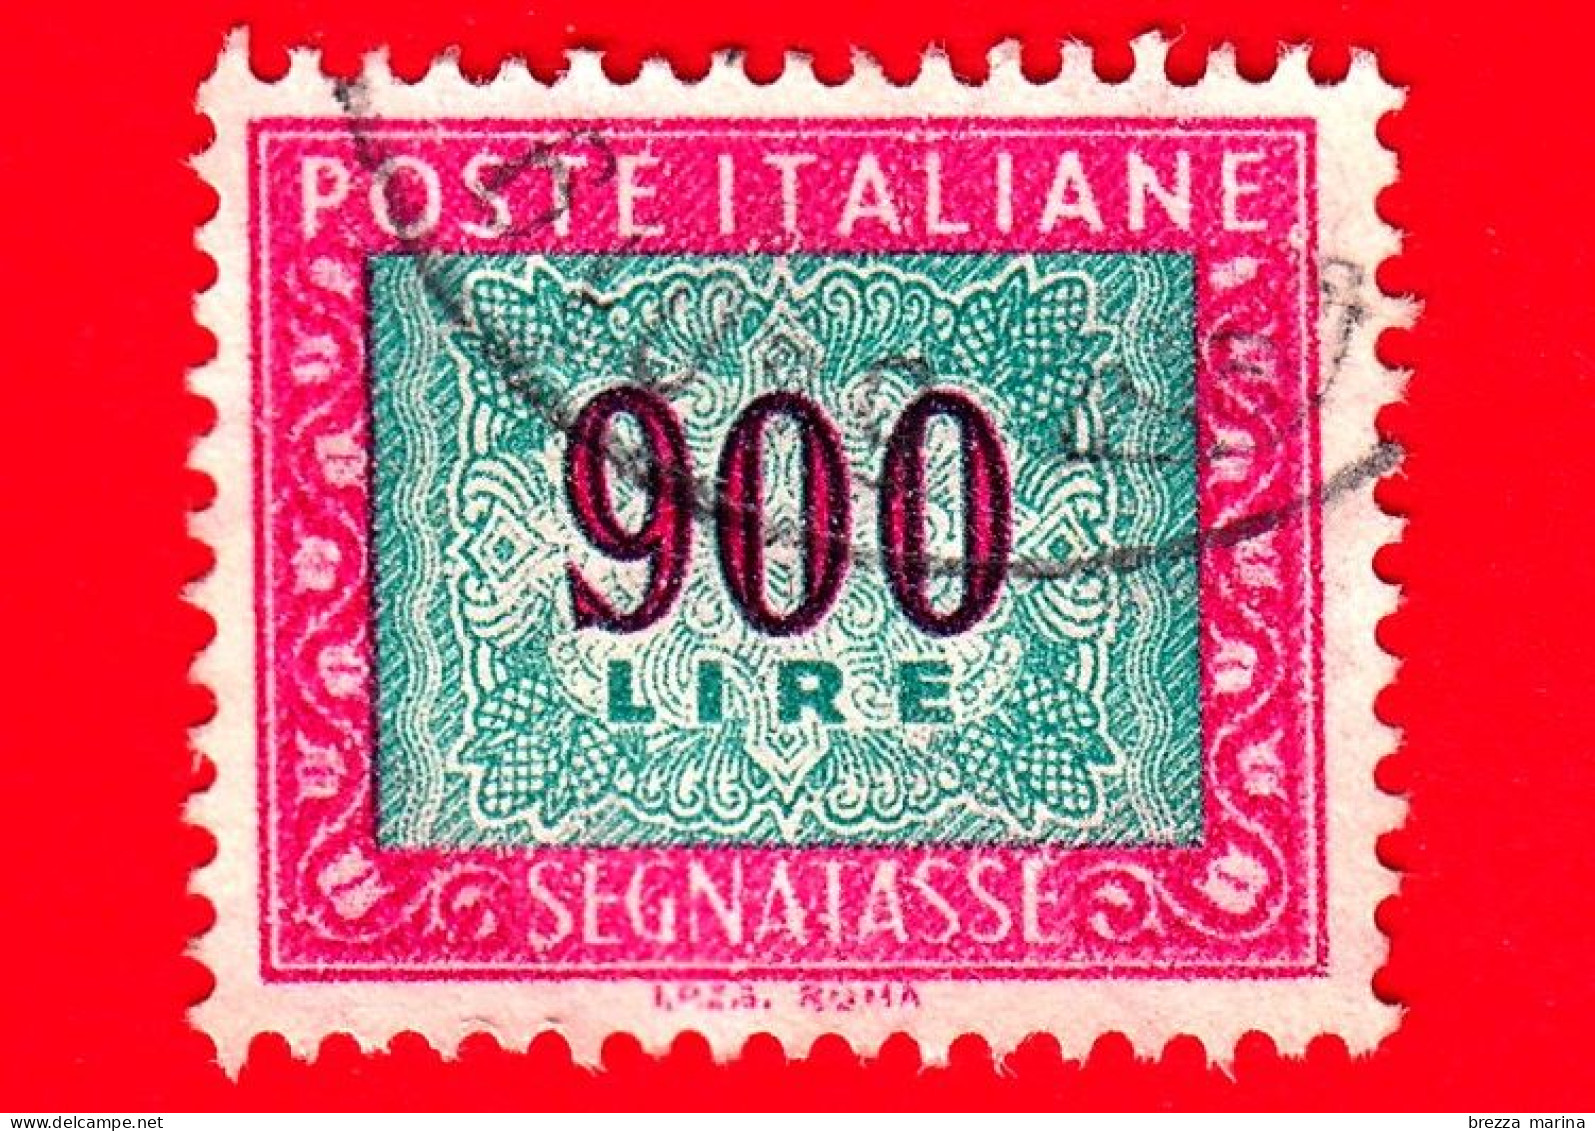 ITALIA - Usato - 1984 - Segnatasse - Cifra E Decorazioni, Filigrana Stelle, Dicitura I.P.Z.S. ROMA  - 900 L. - Segnatasse